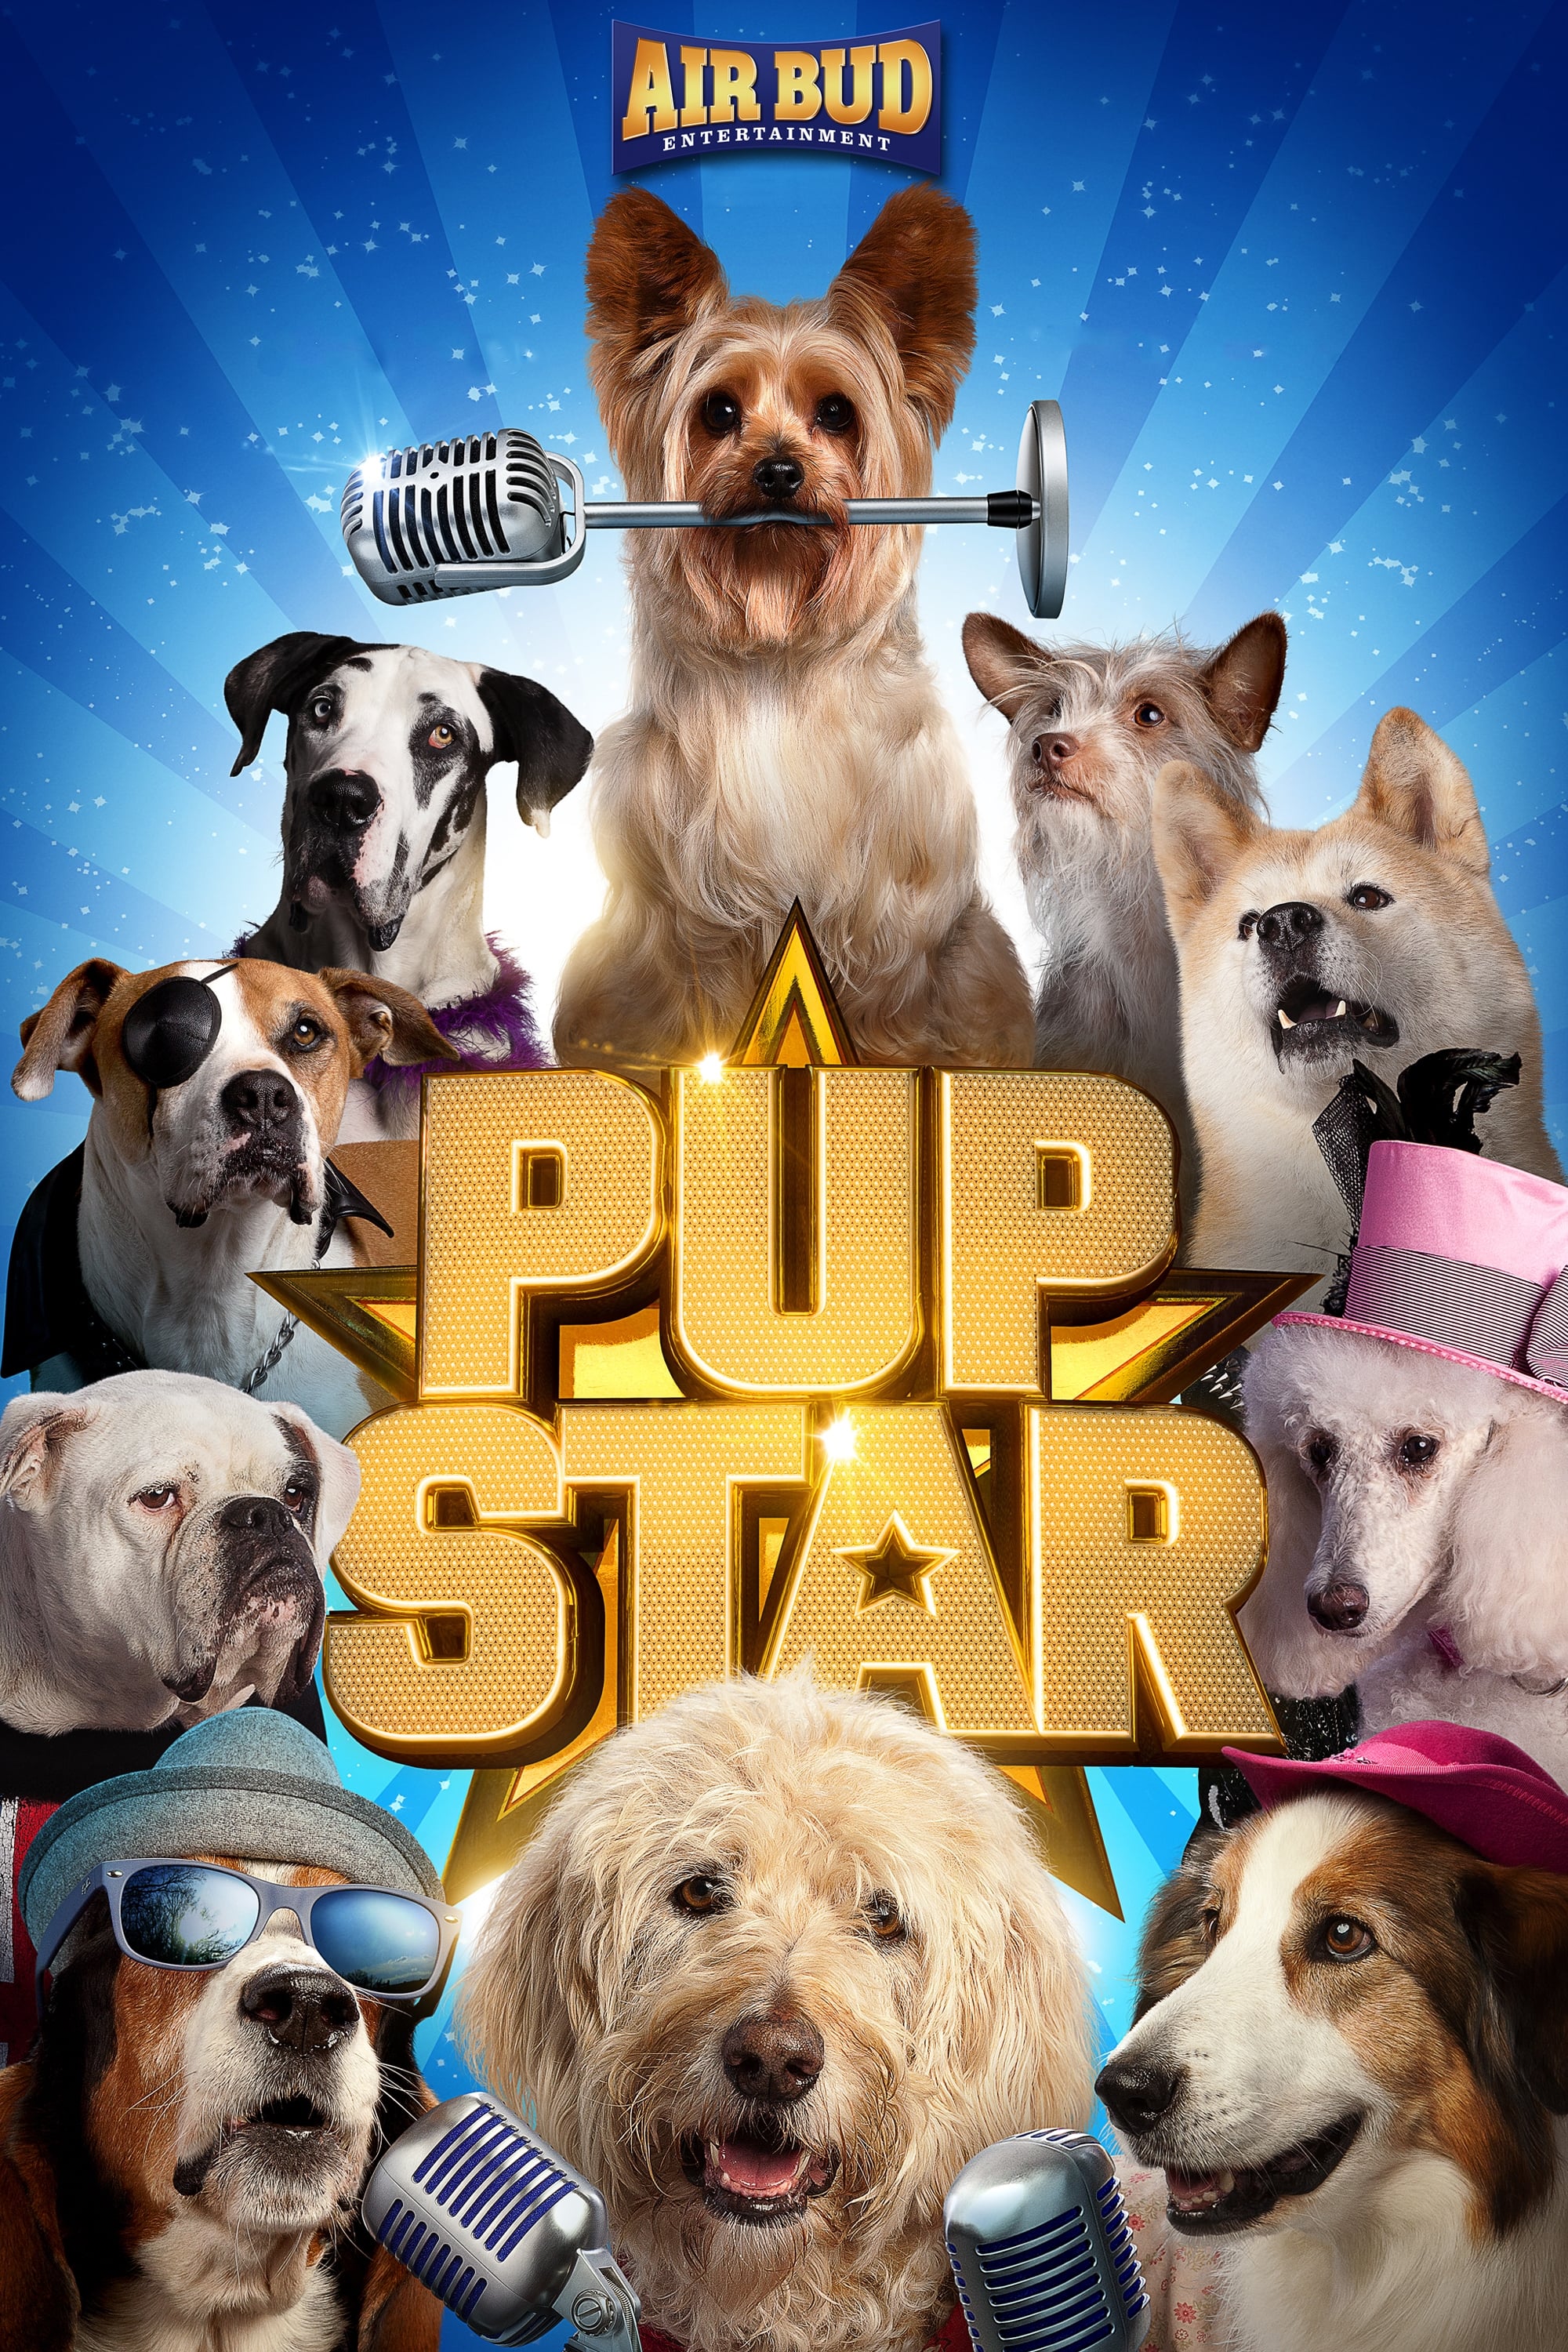 Pup Star (2016)